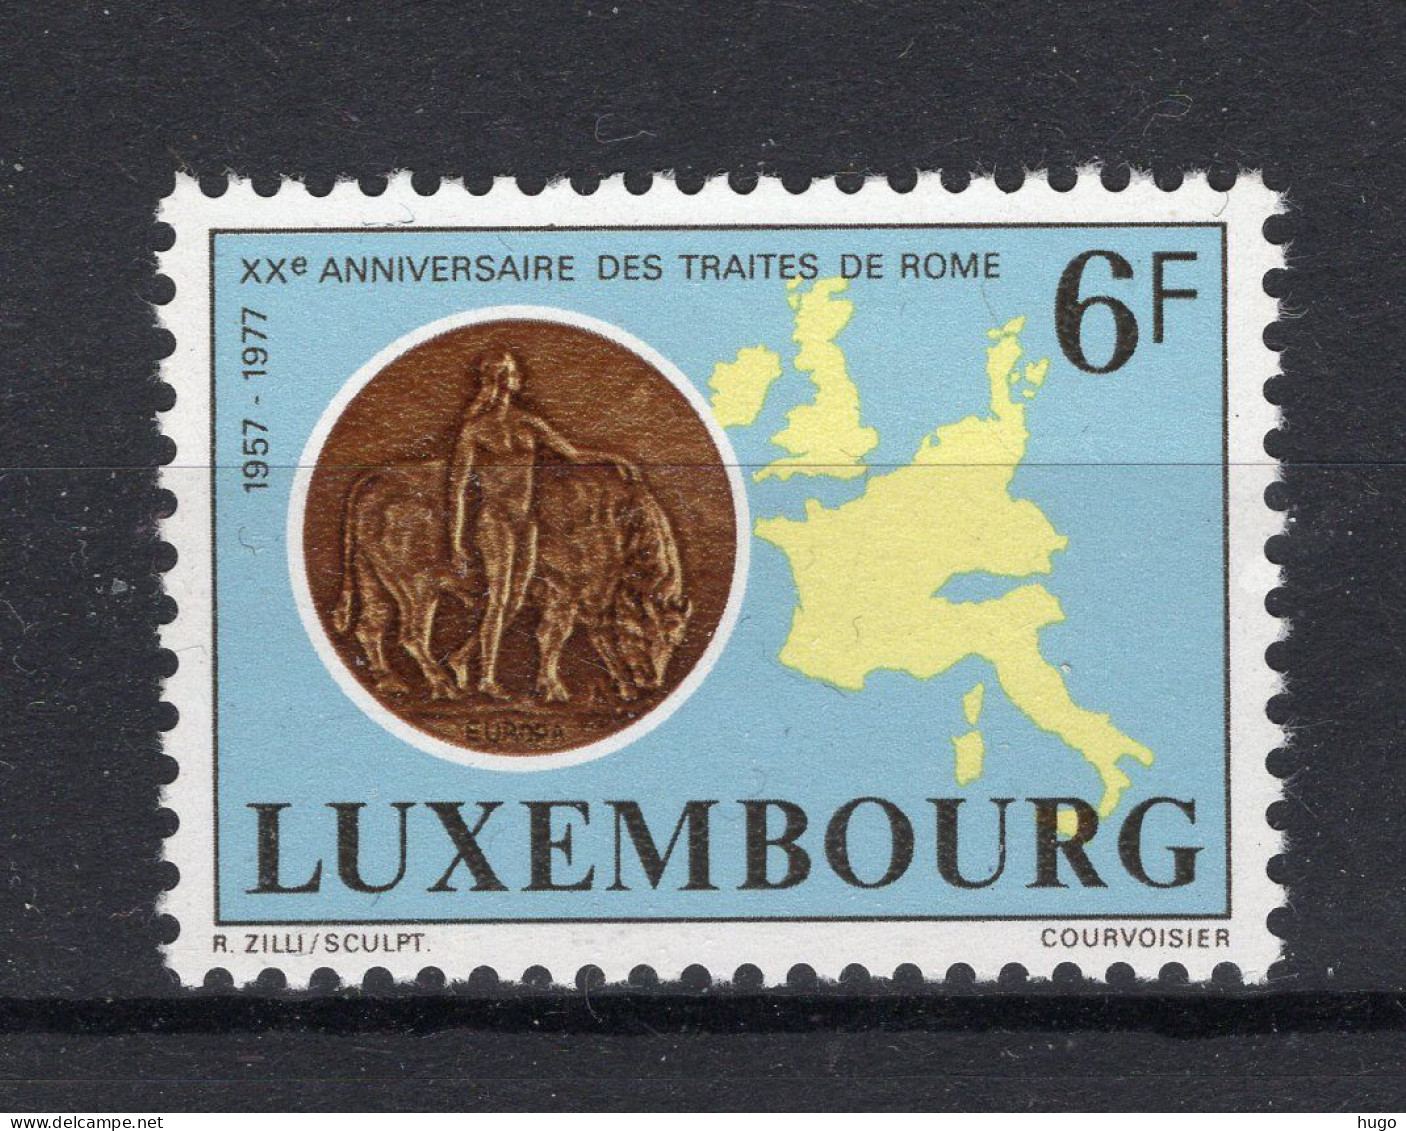 LUXEMBURG Yt. 906 MNH 1977 - Neufs